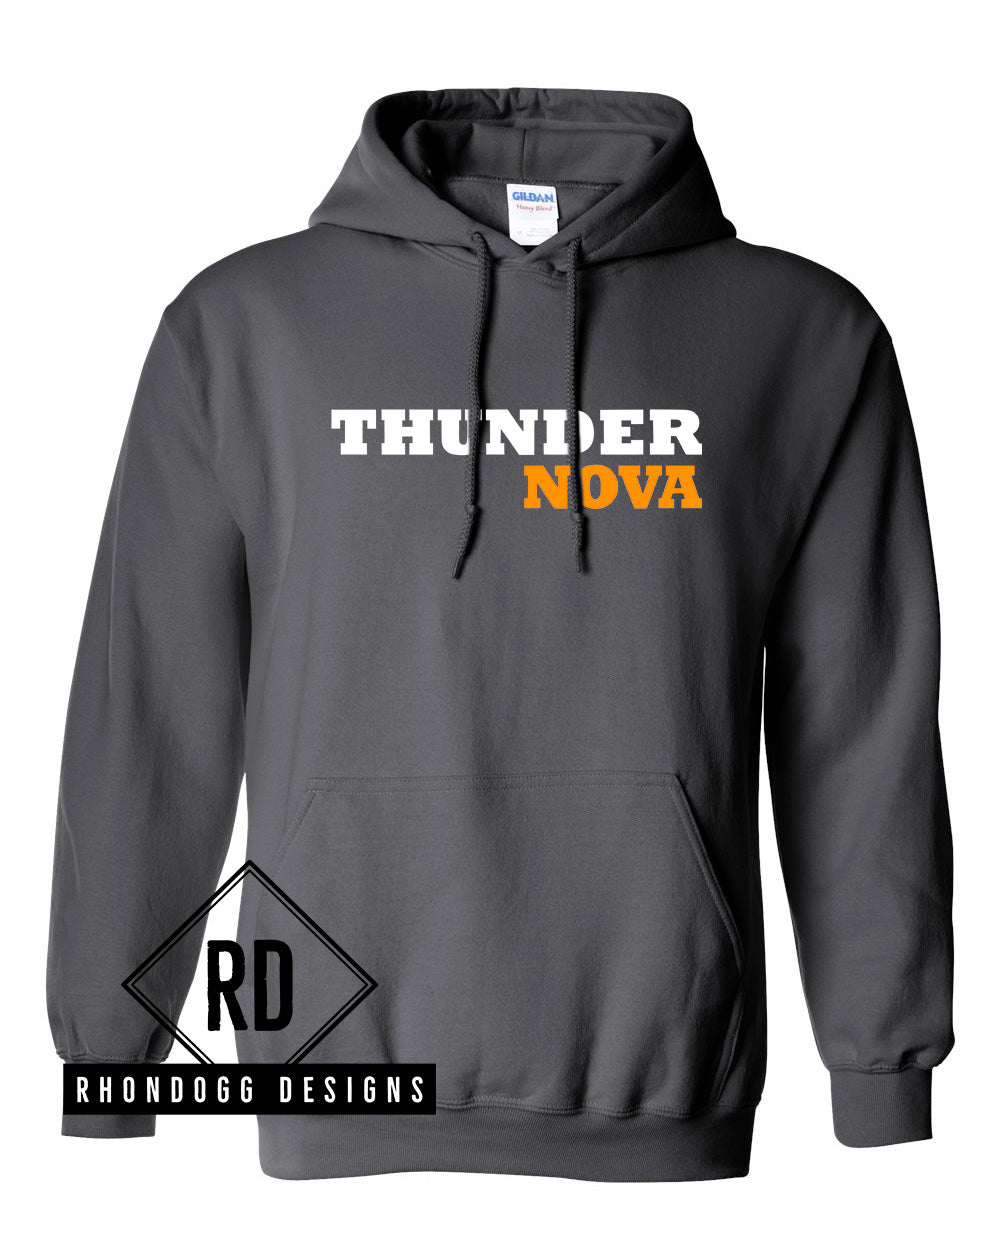 Thunder Nova Hooded Sweatshirt